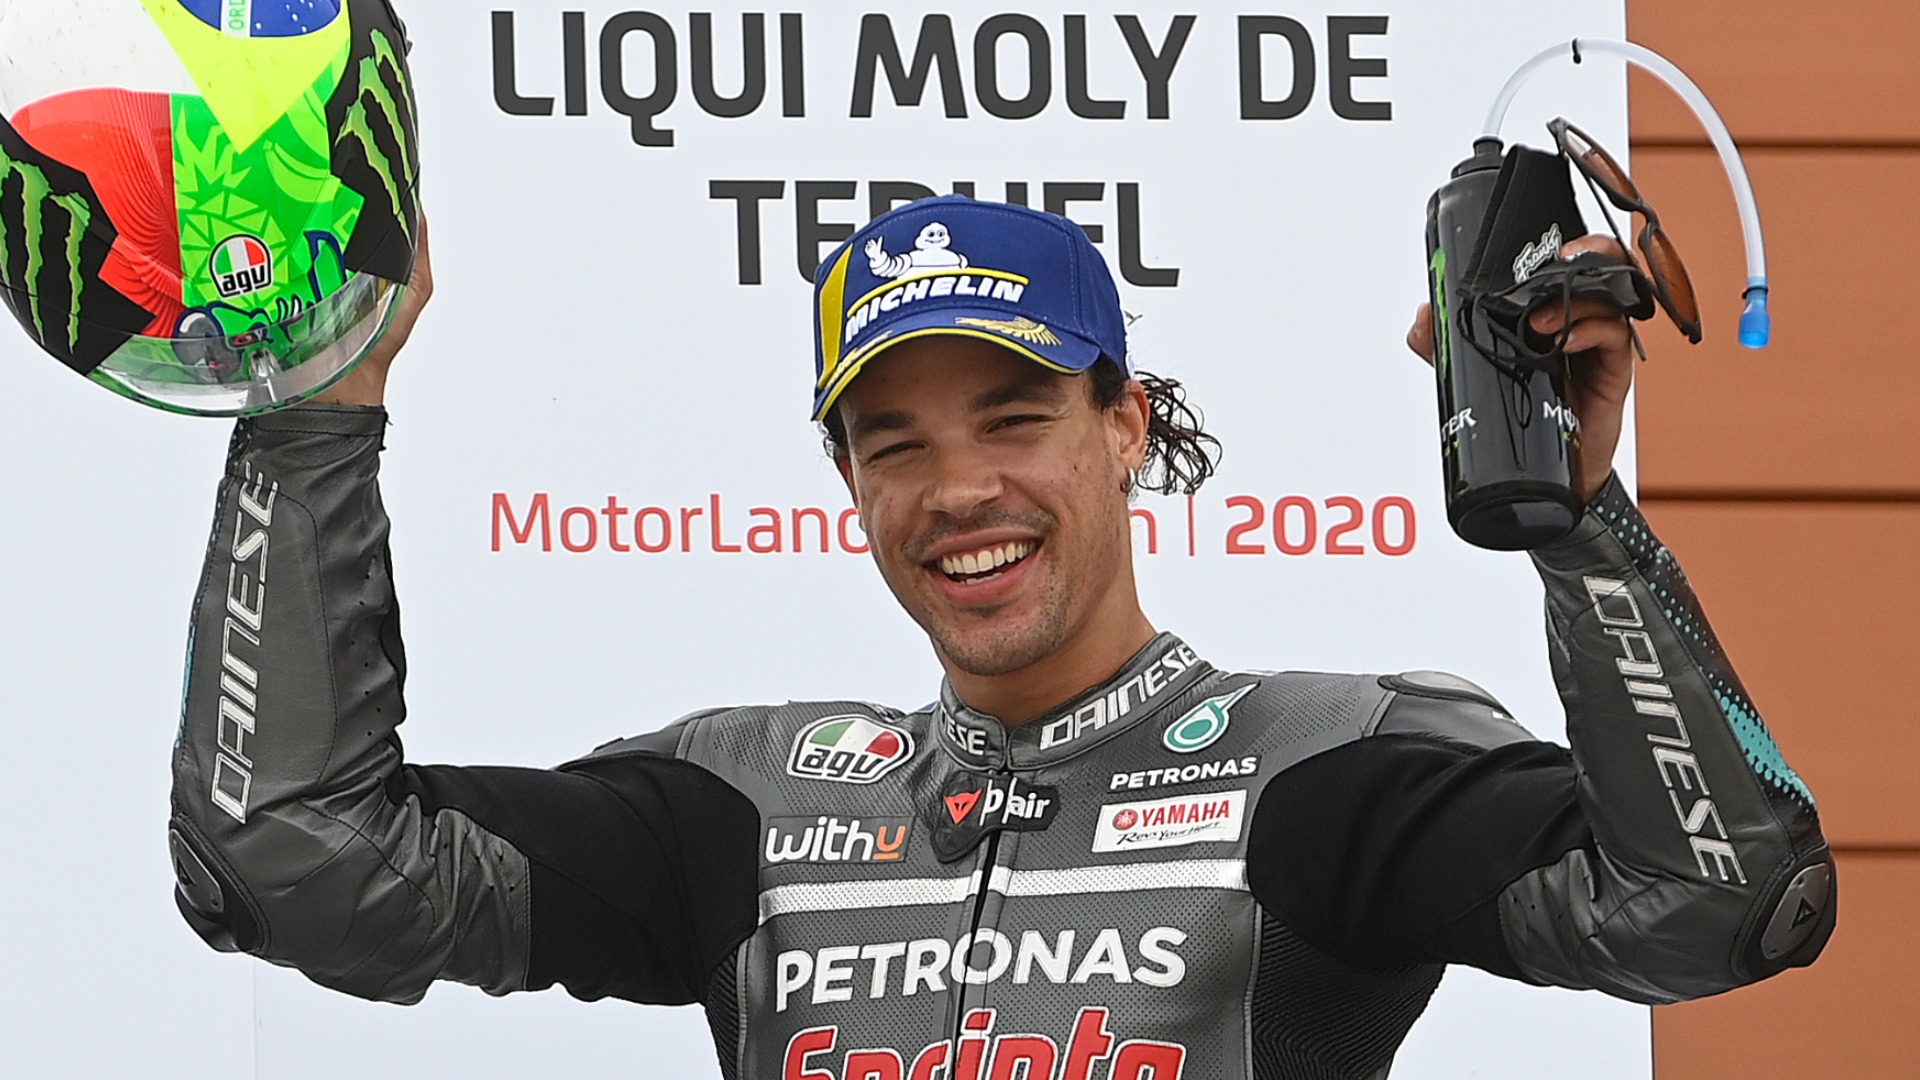 "Everything came easy" for Franco Morbidelli as he won the Teruel Grand Prix, the Petronas Yamaha rider revealed.